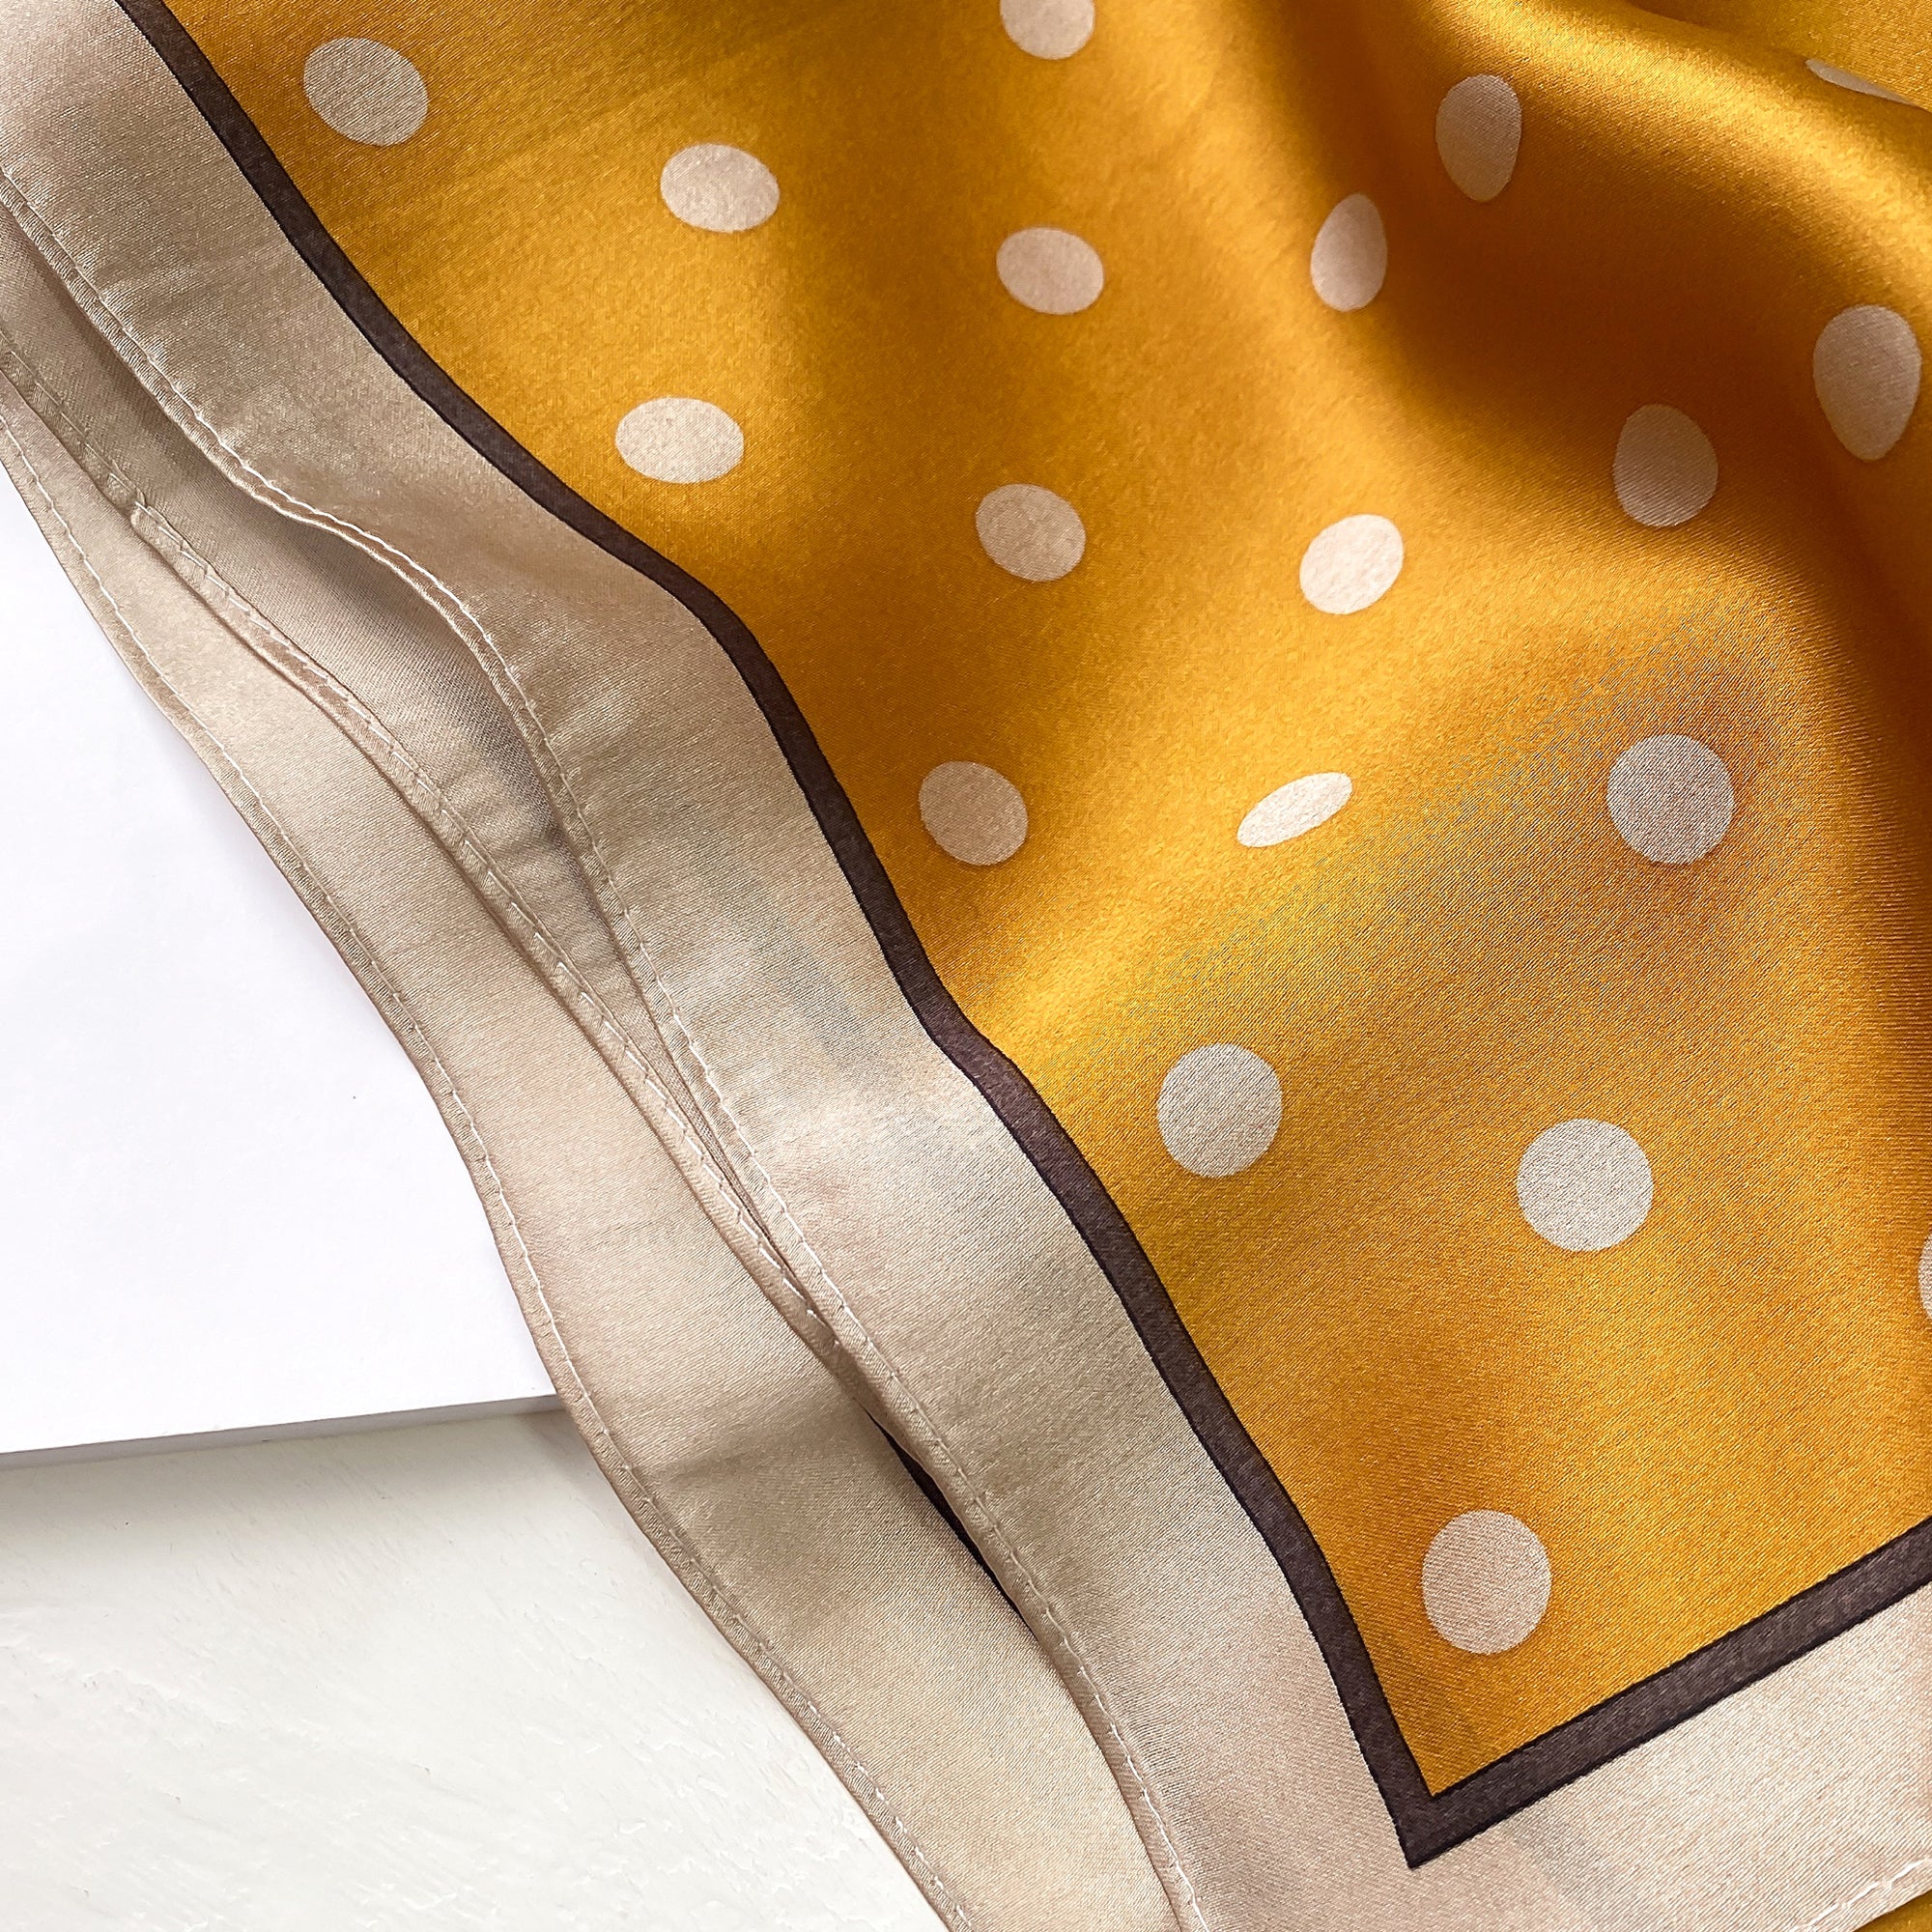 a mustard yellow small silk scarf/neckerchief with polka dot pattern  Edit alt text